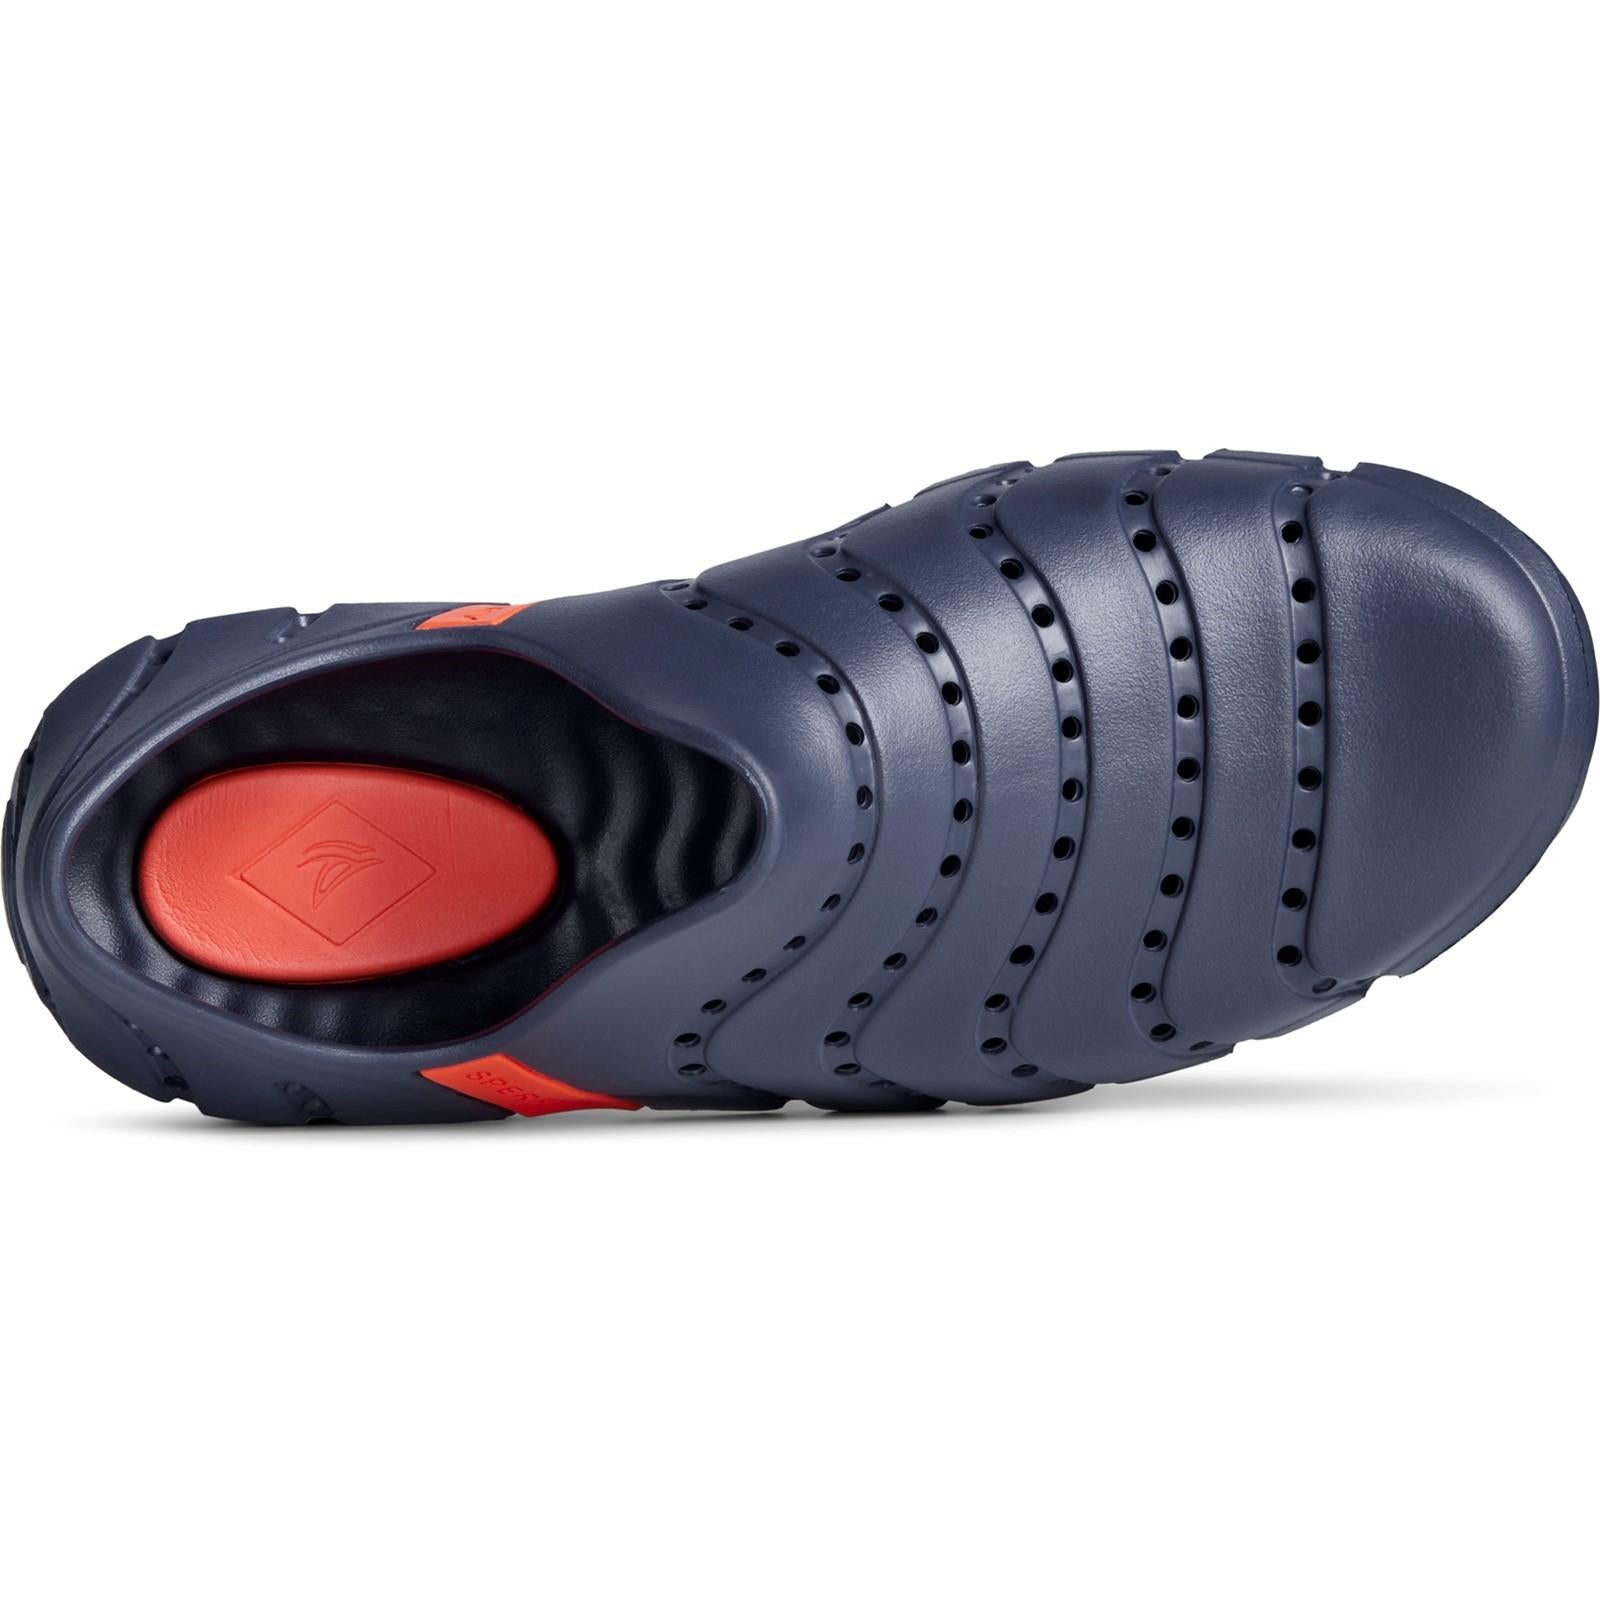 Sperry Top-sider WATER STRIDER water shoe